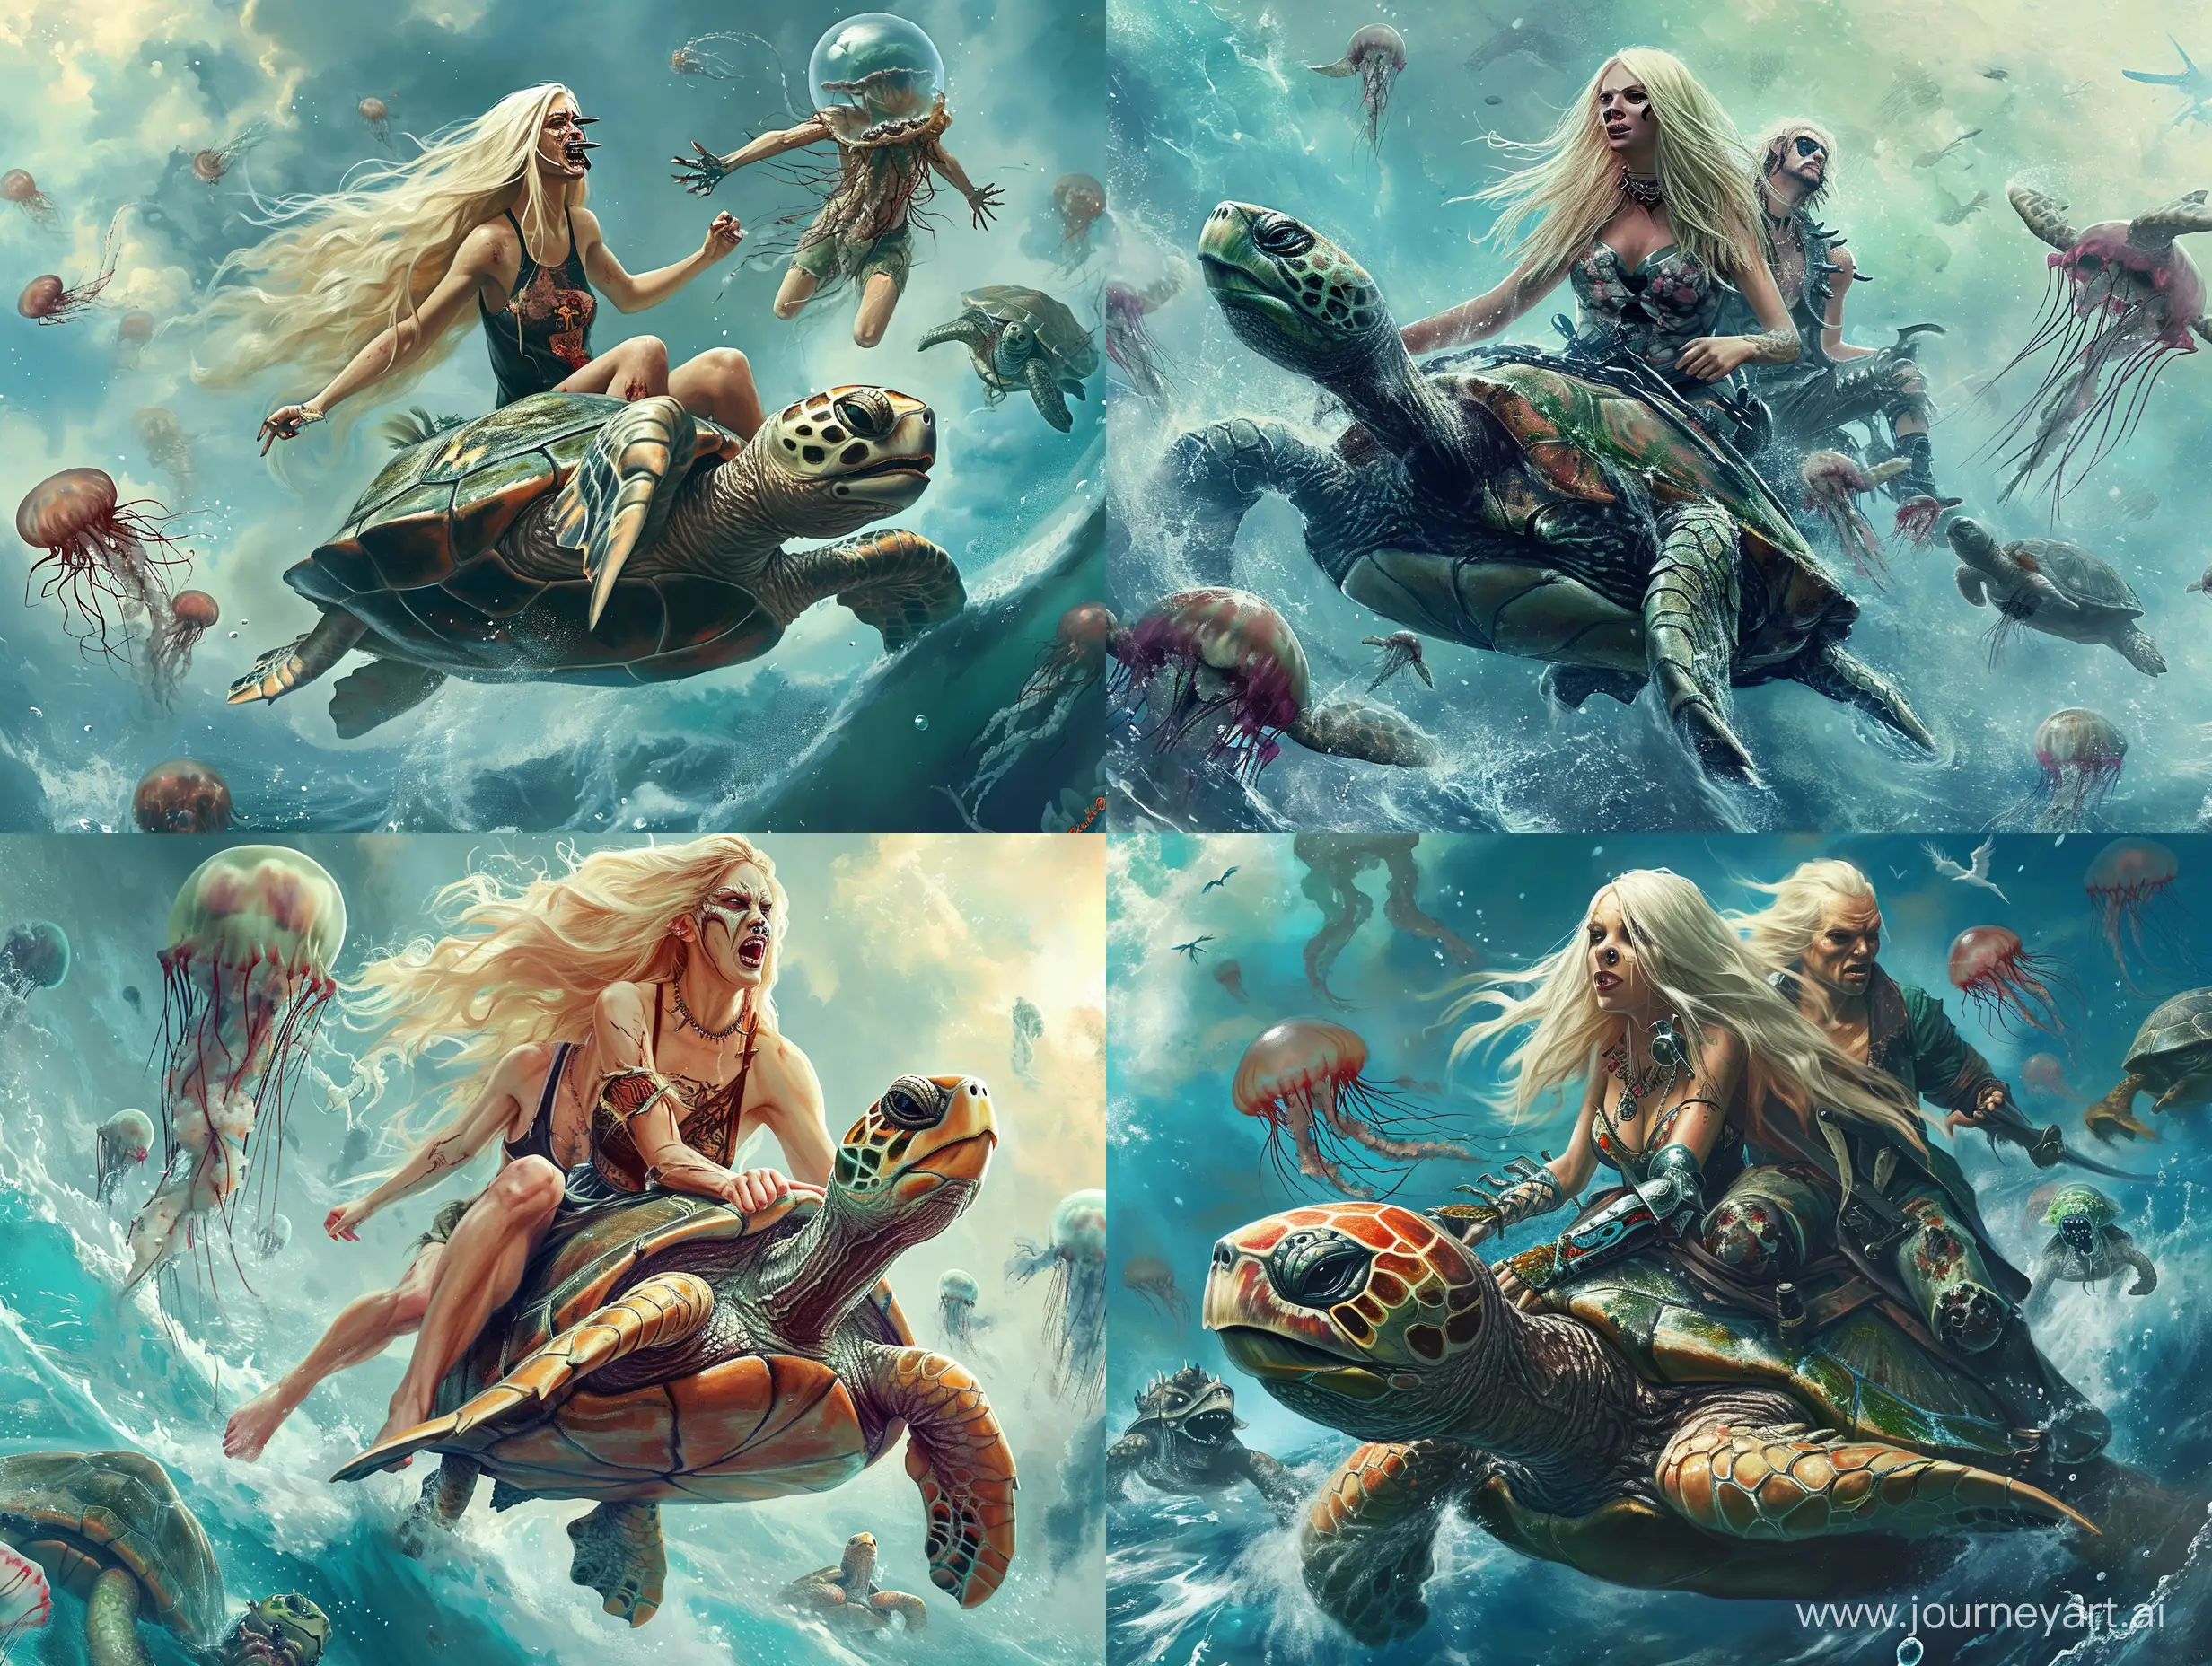 Dramatic-Photorealistic-Vampires-Riding-Turtle-in-Epic-Sea-Battle